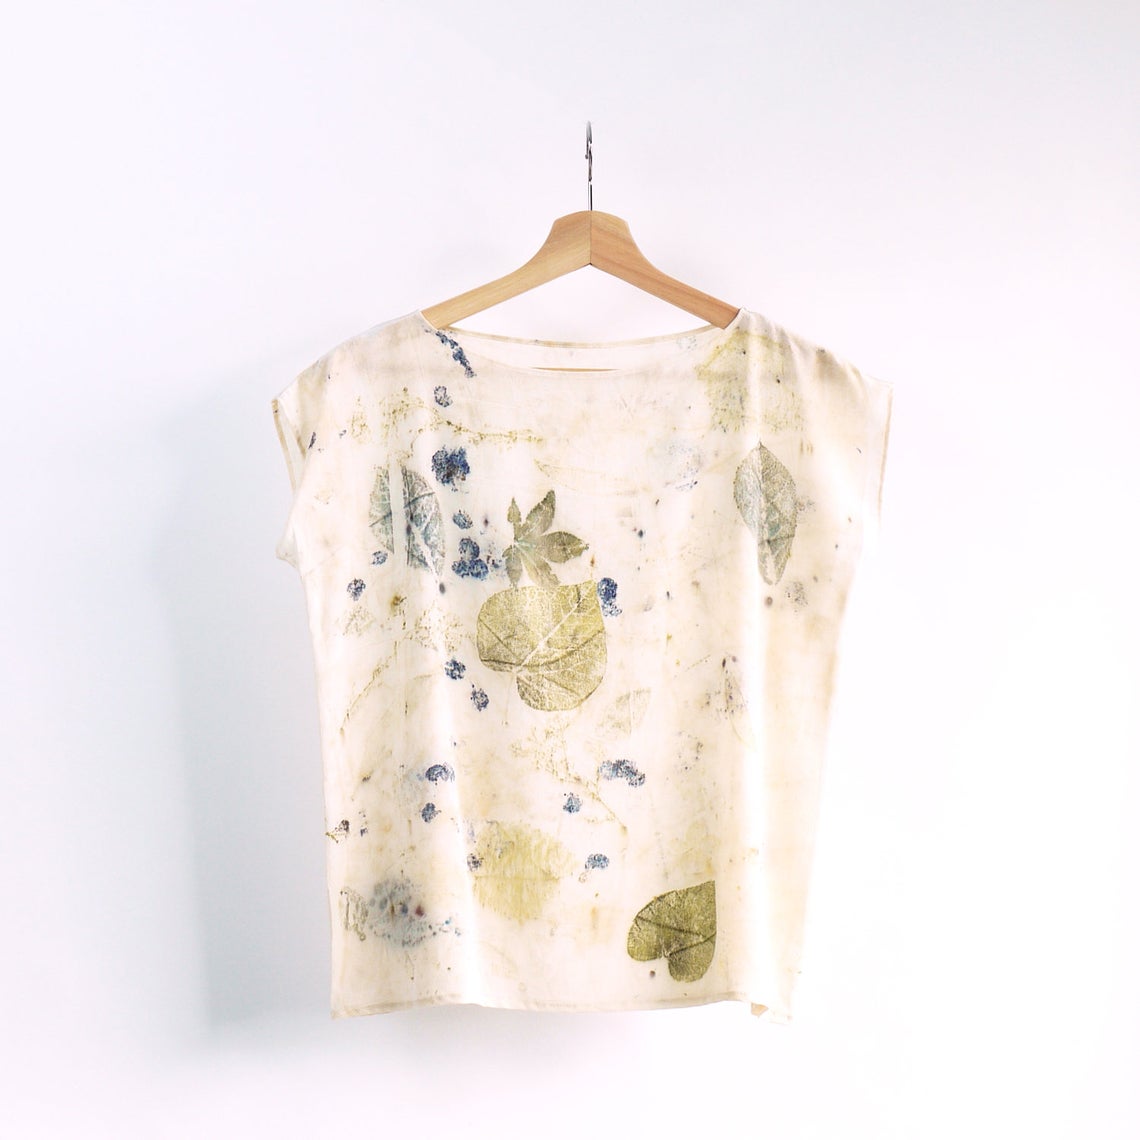 Leaf Print silk top. Eco print top, botanical natural dye silk top.